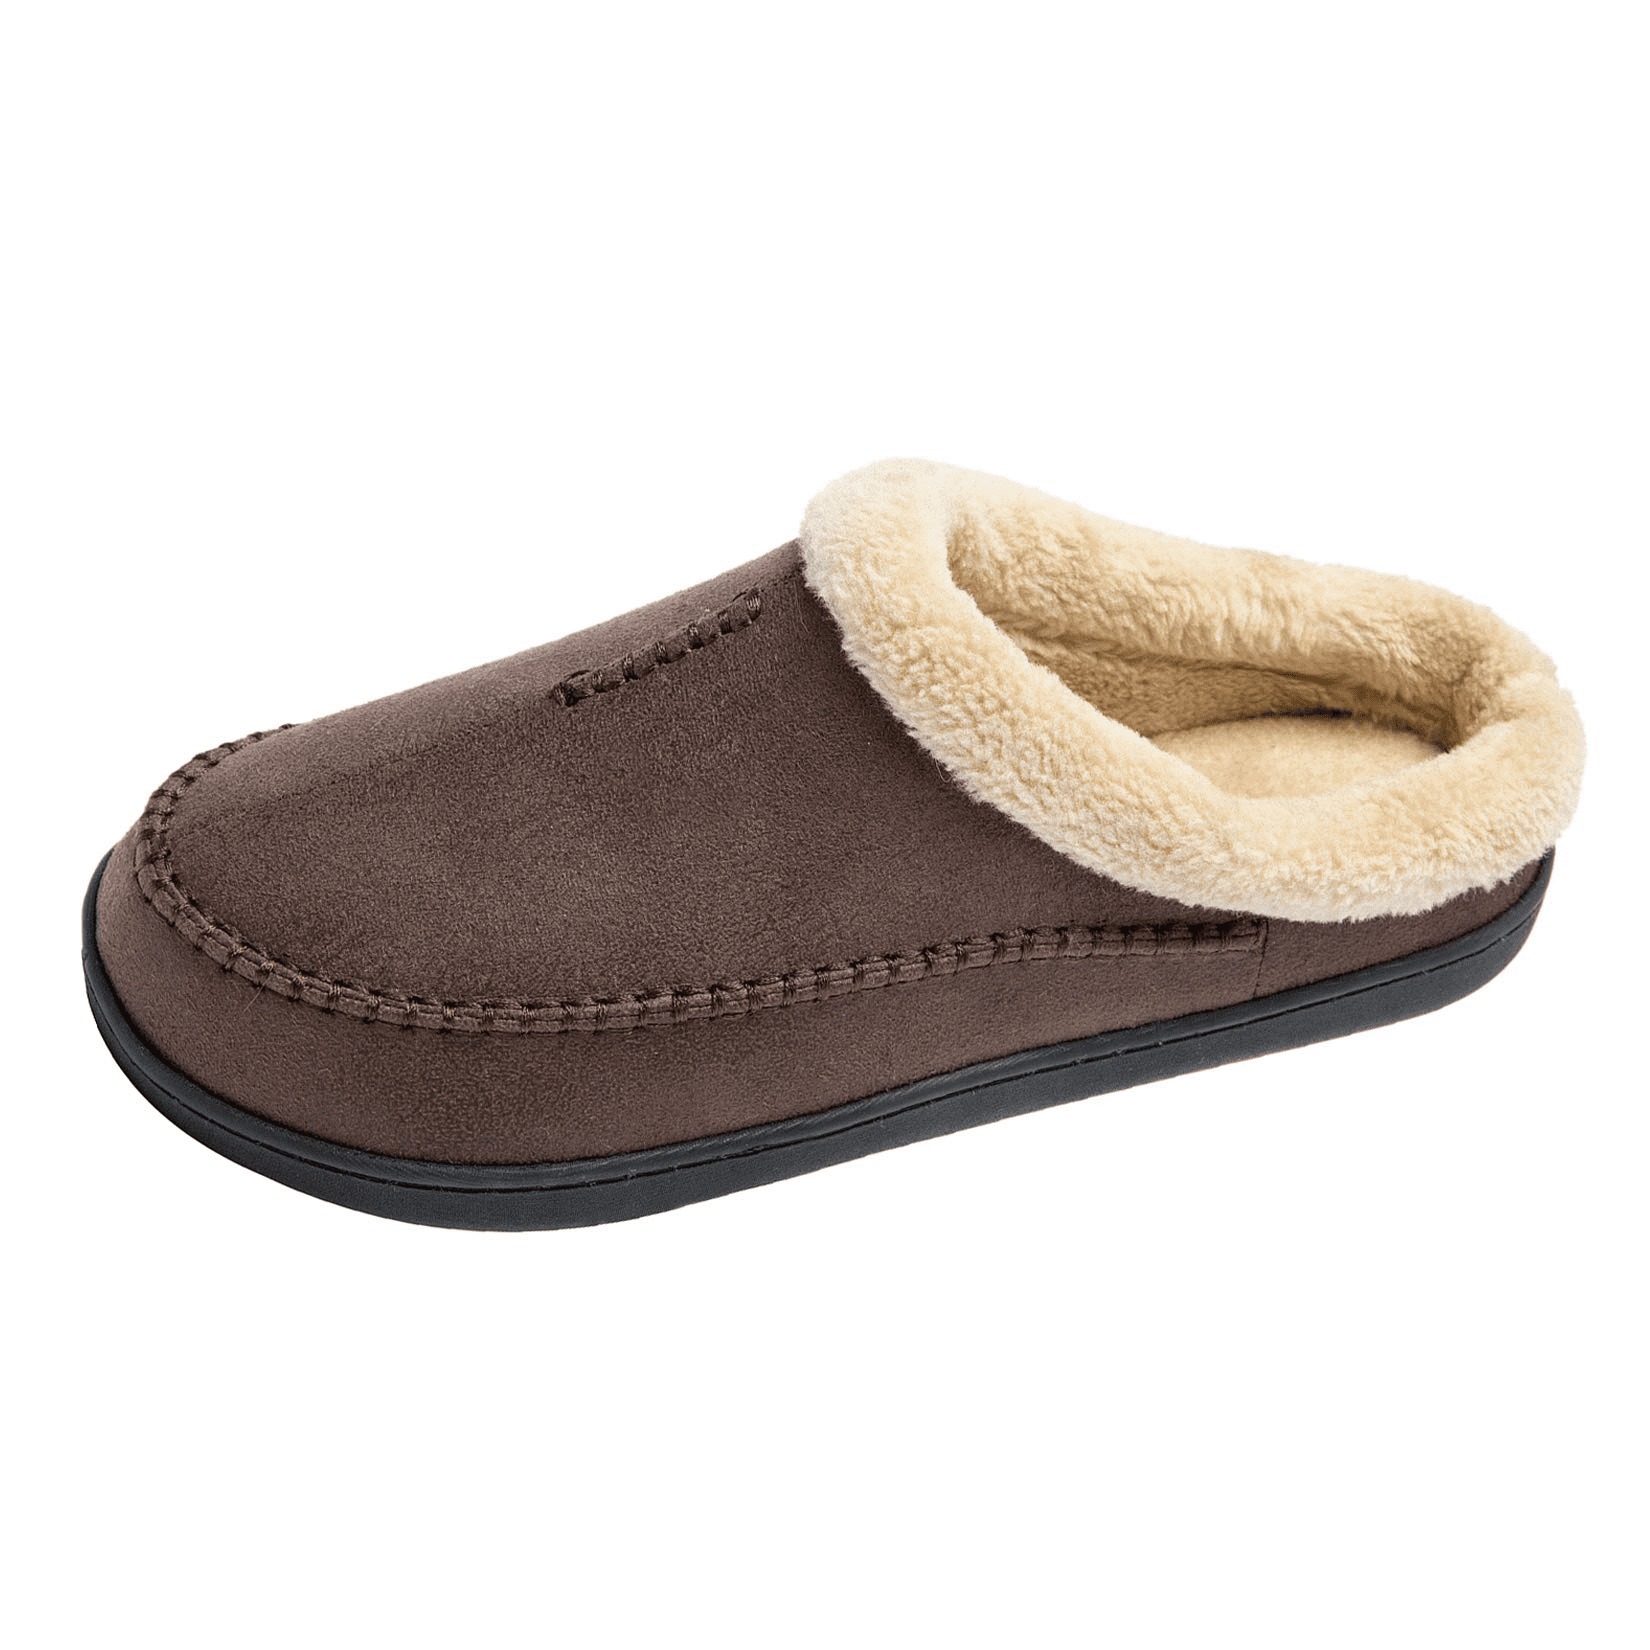 Men's Memory Foam Micro Woolen Plush Fleece Slippers Slip On Clog House Shoes 